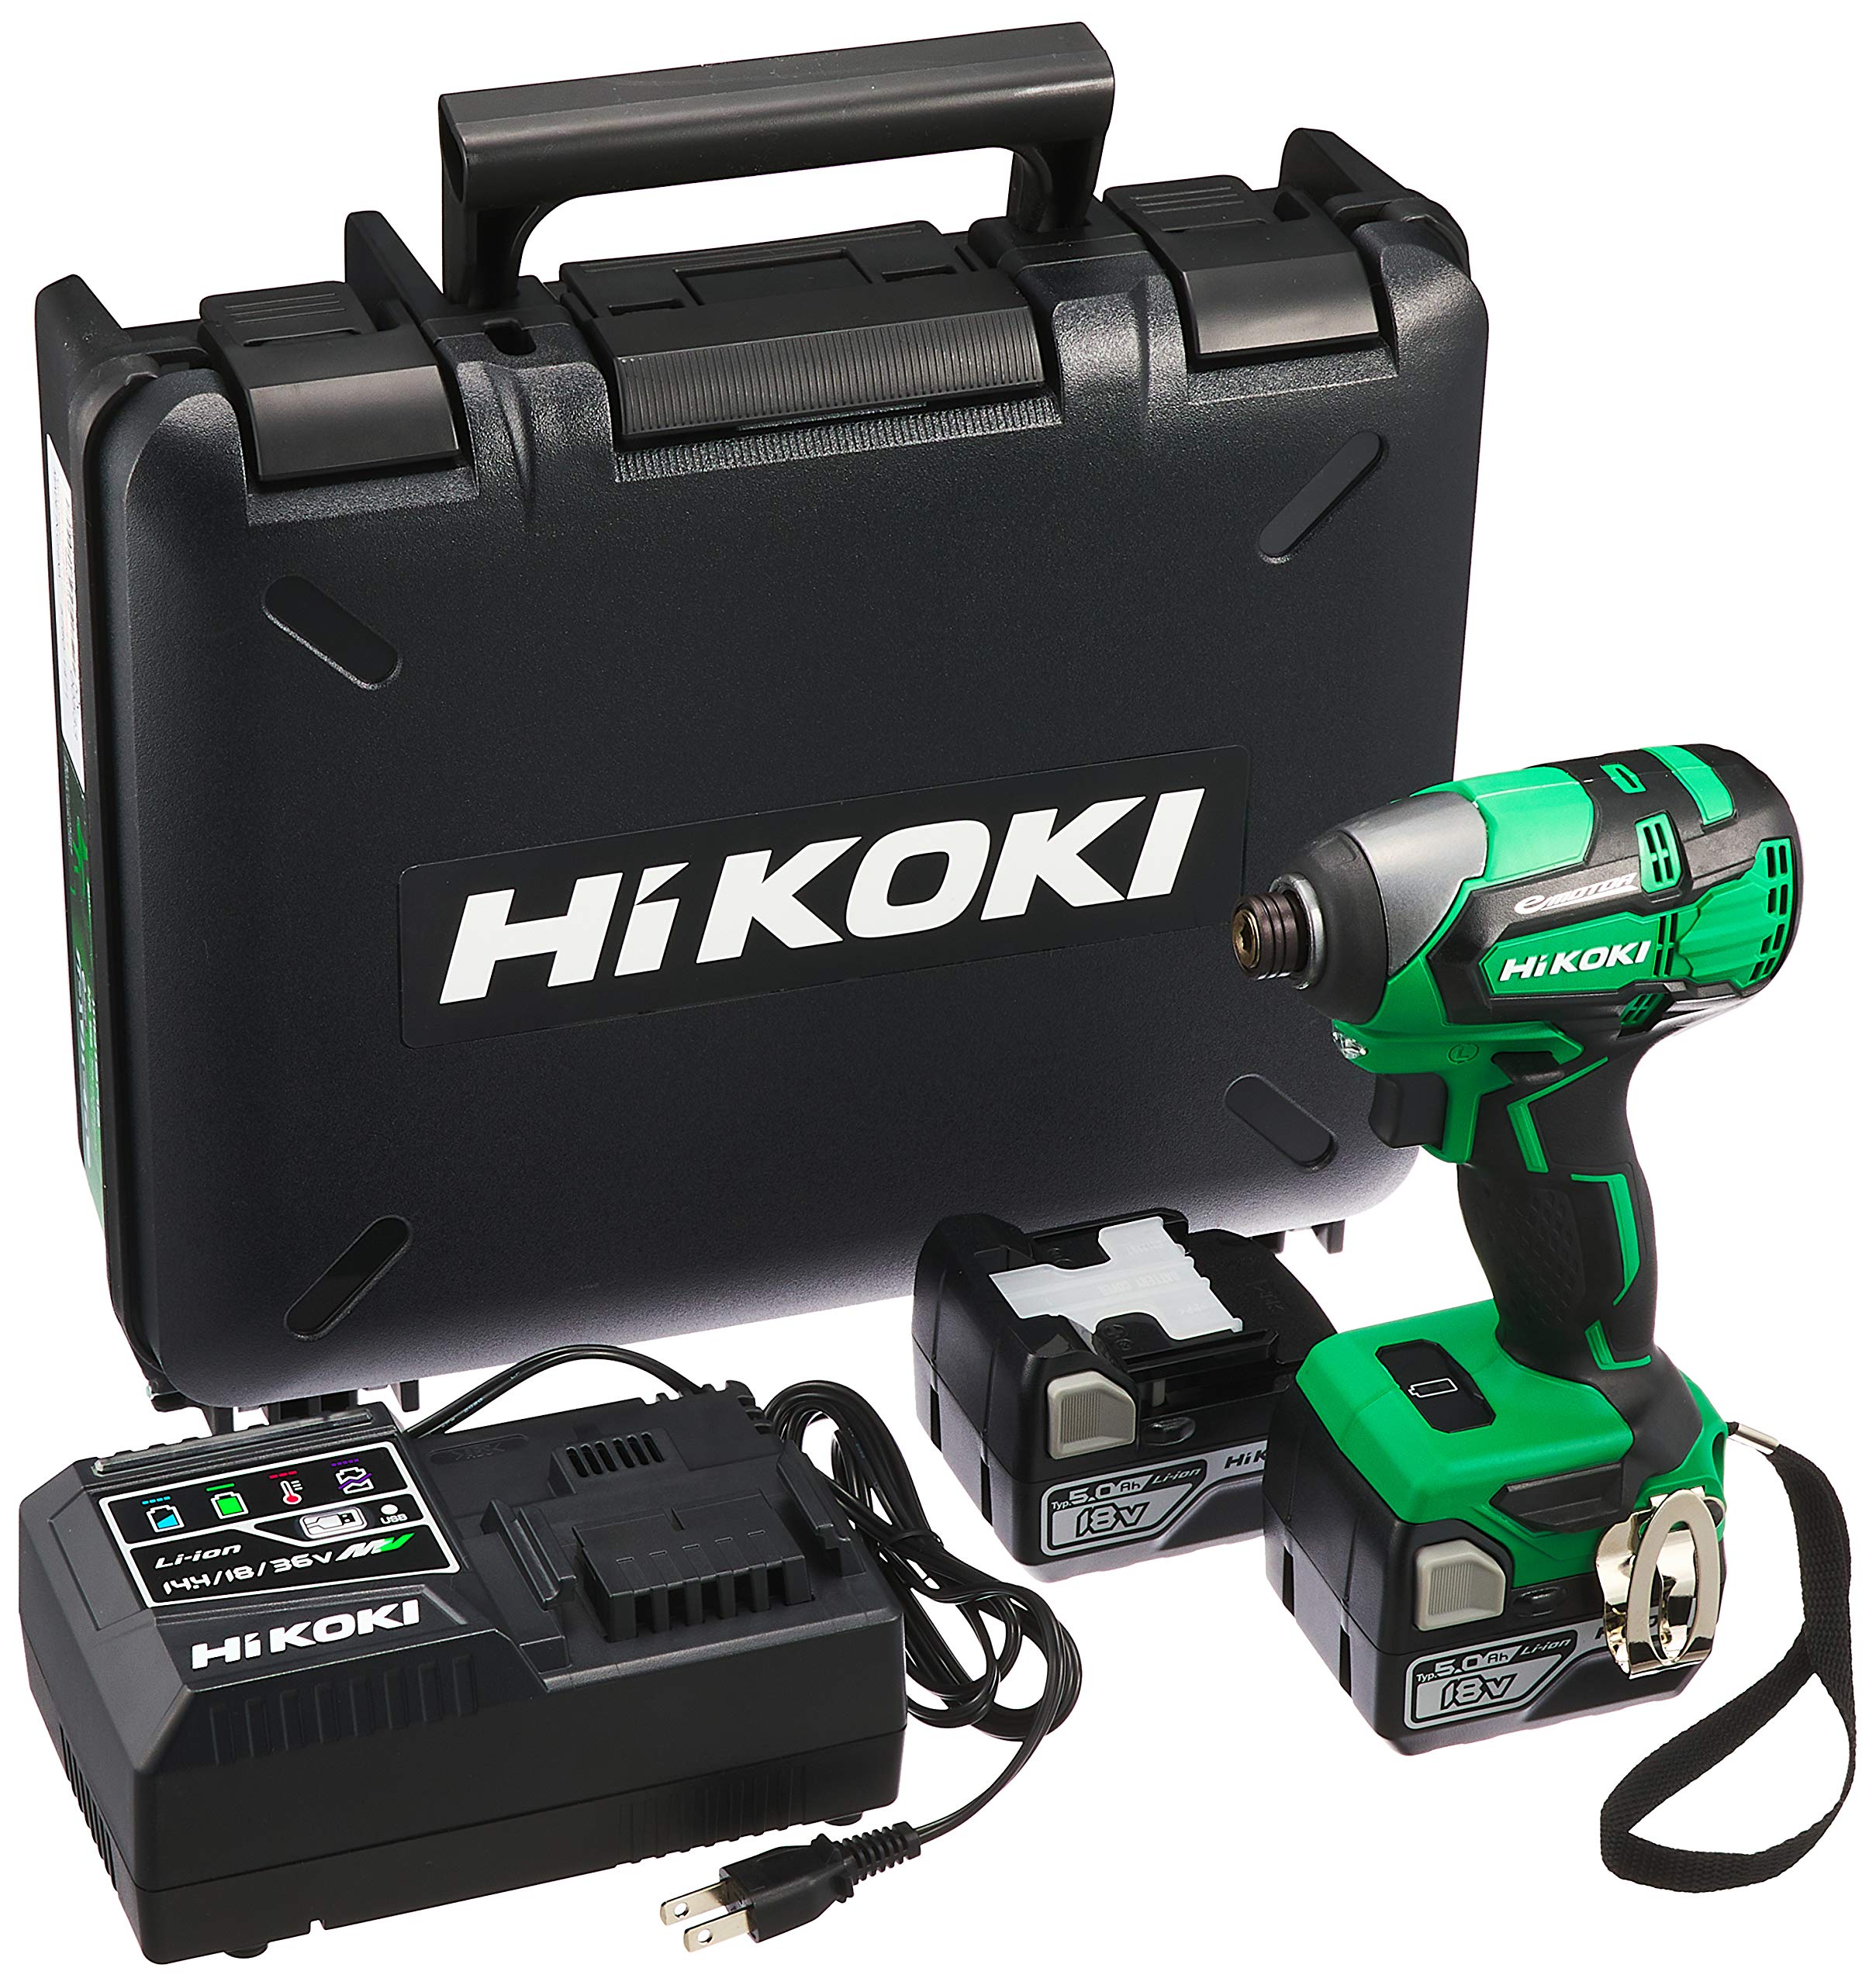 HiKOKI(ハイコーキ) 18Vコードレスインパクトドライバ トルク172N・m アグレッシブグリーン 蓄電池・充電器・ケース付き WH18DB(2JC)